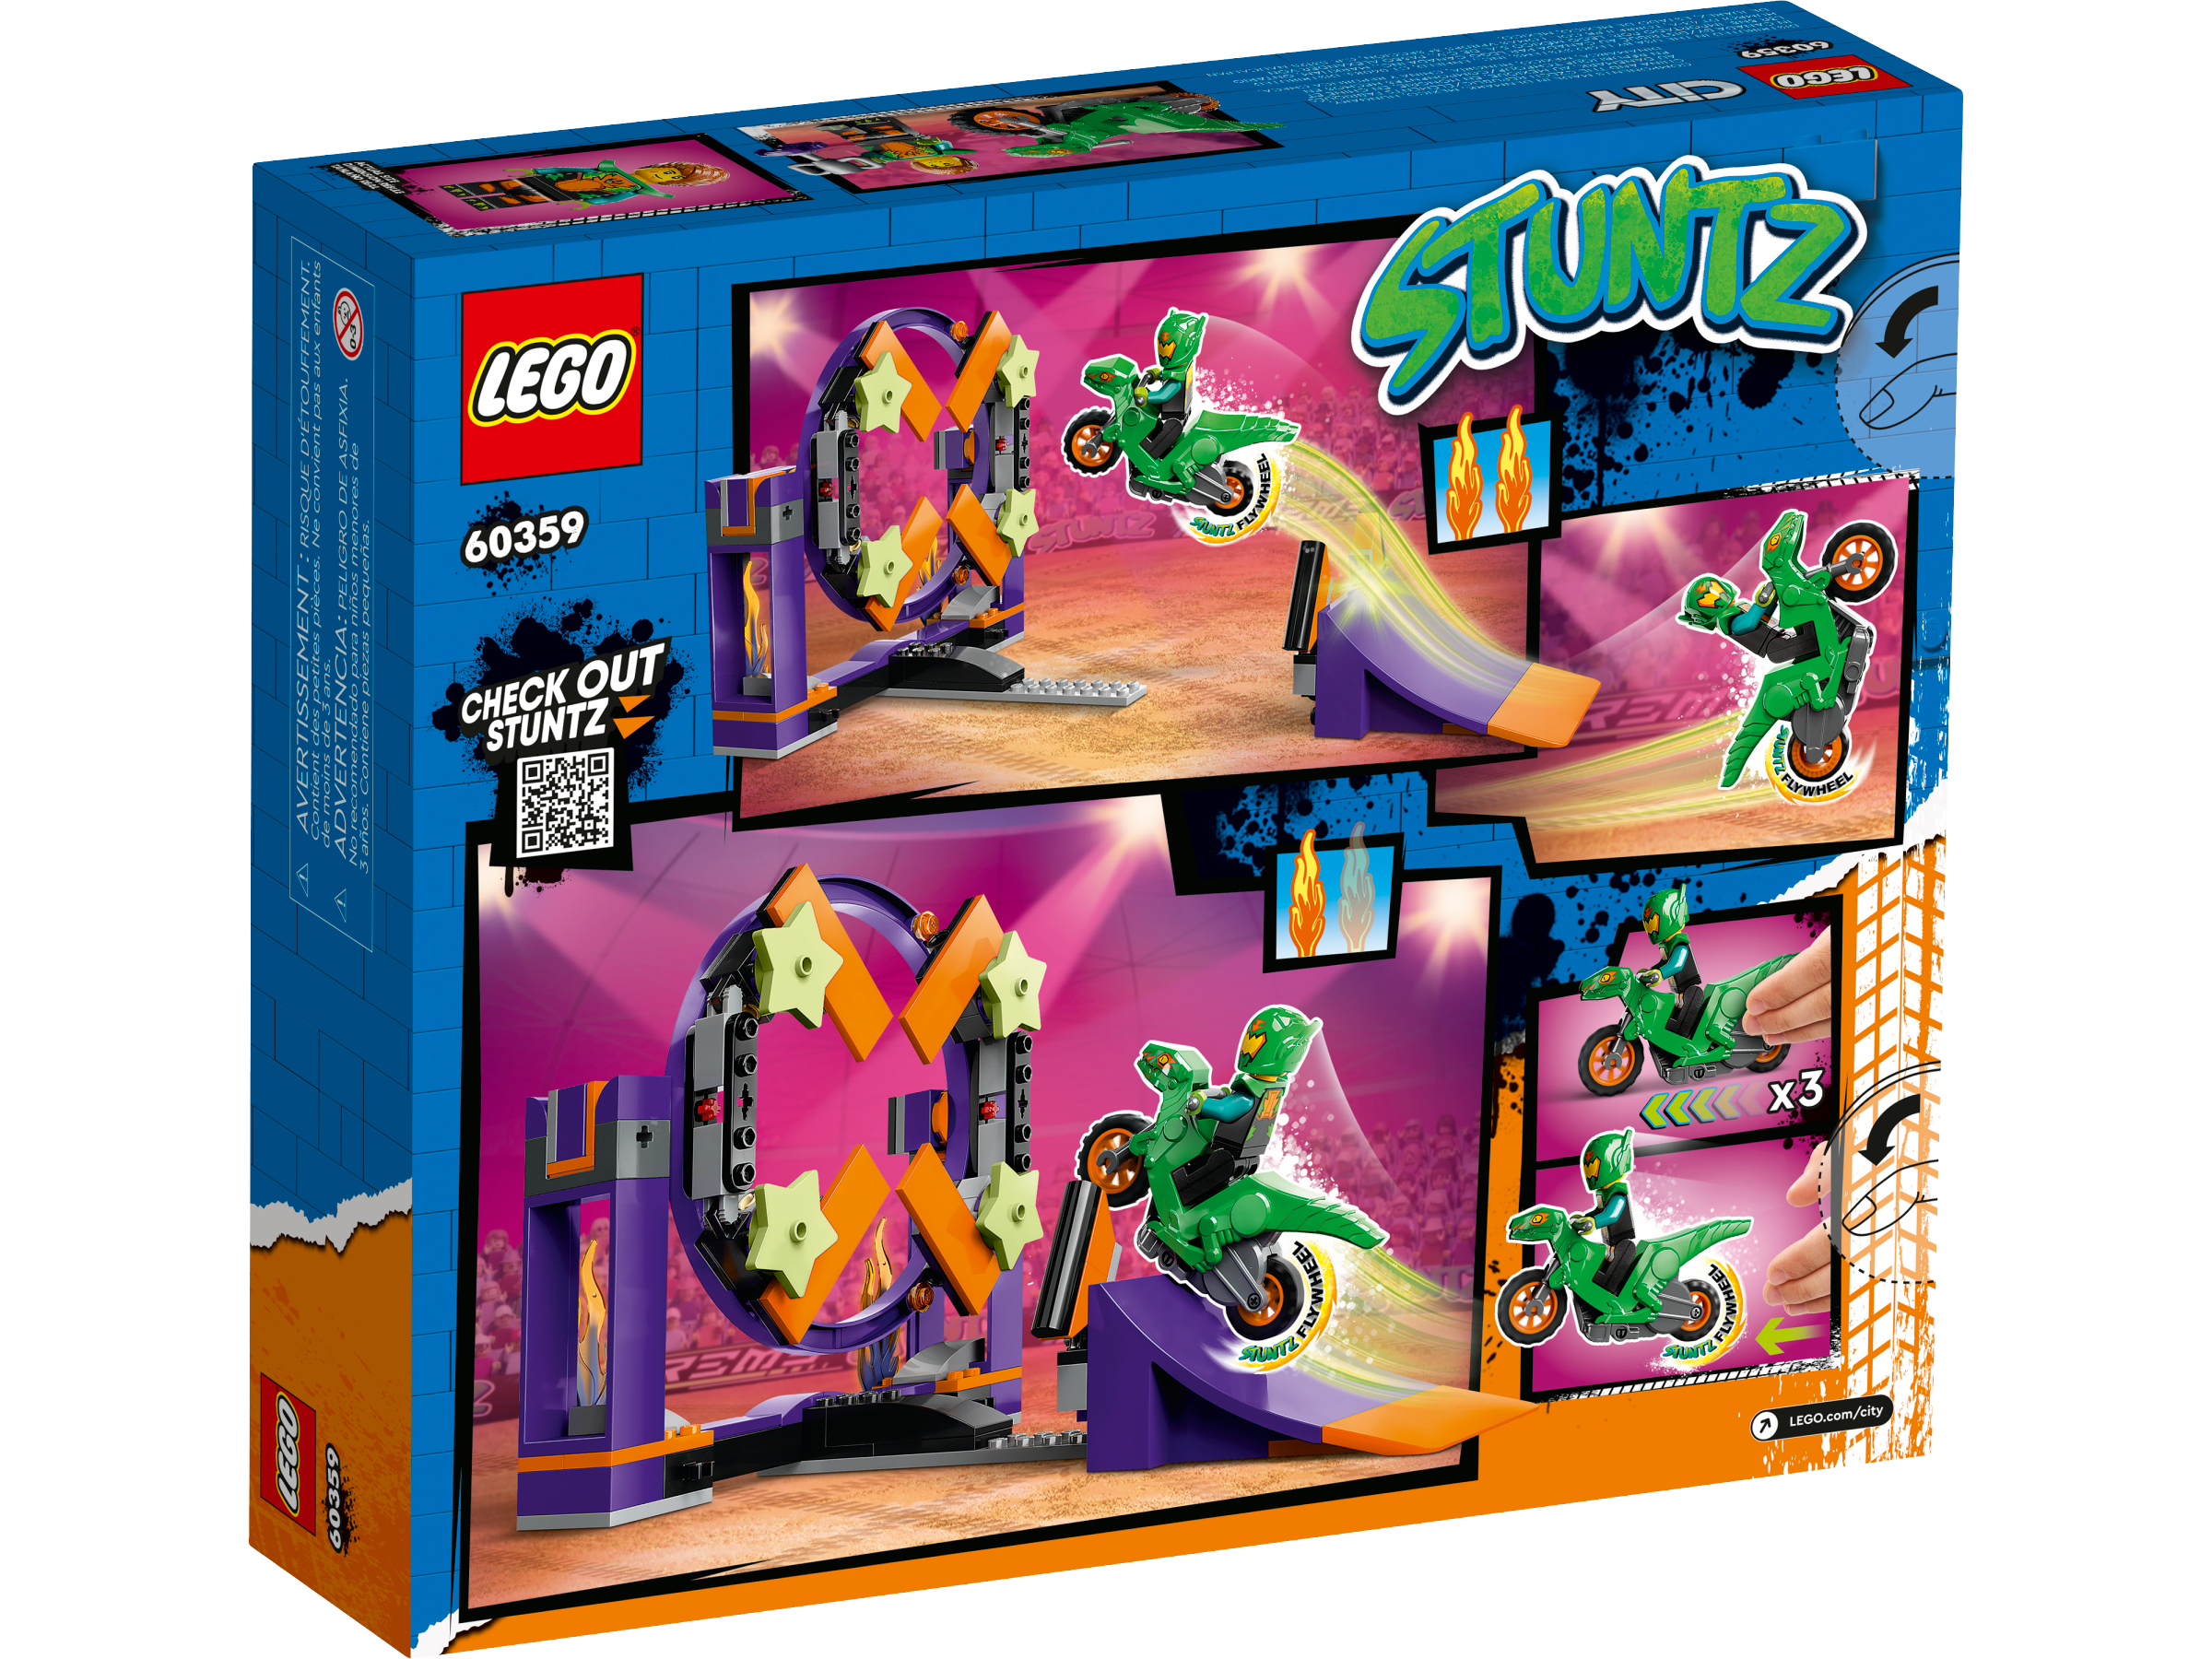 LEGO® City Dunk Stunt Ramp Challenge 144 Piece Building Kit (60359)